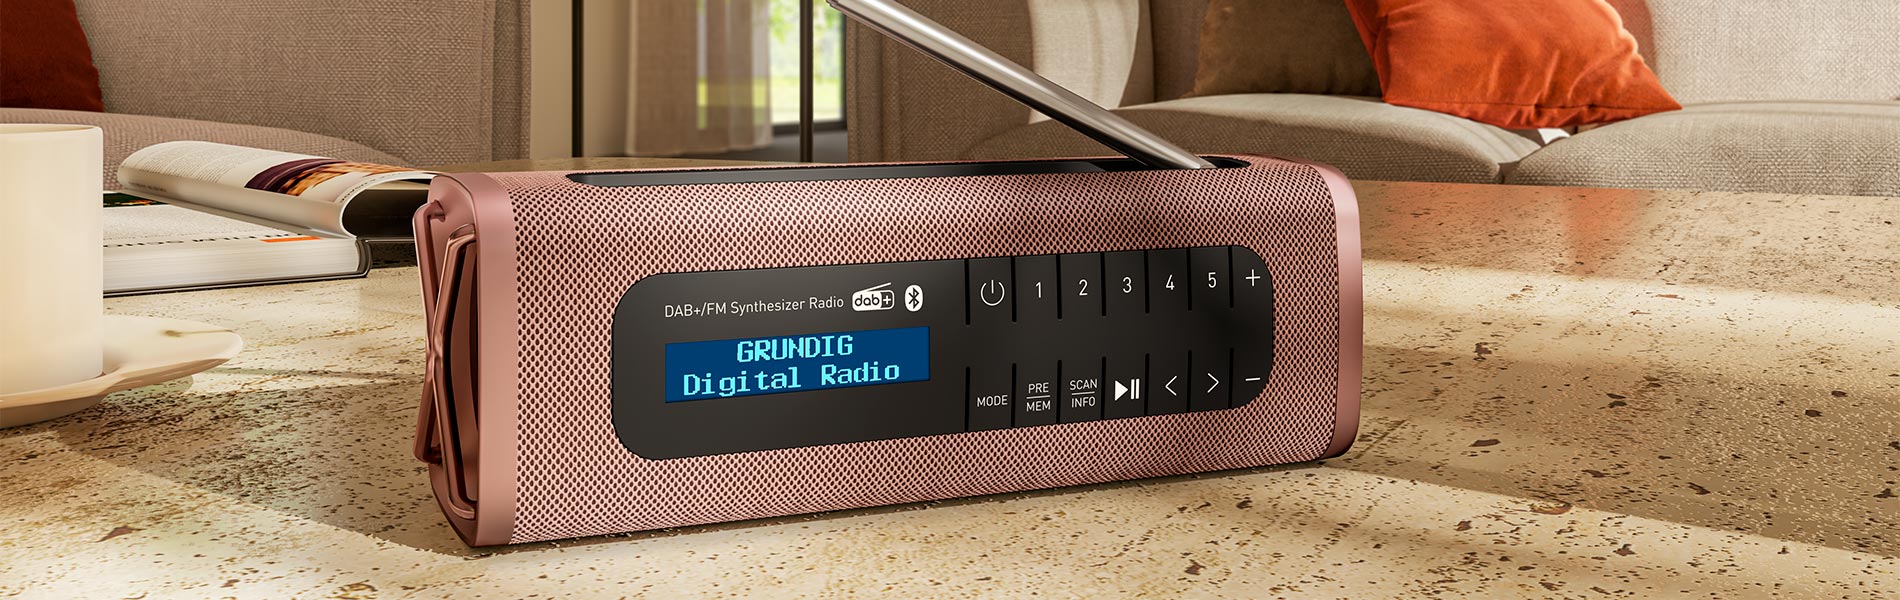 Radio analógica portátil con aspecto antiguo, radio dab fm con